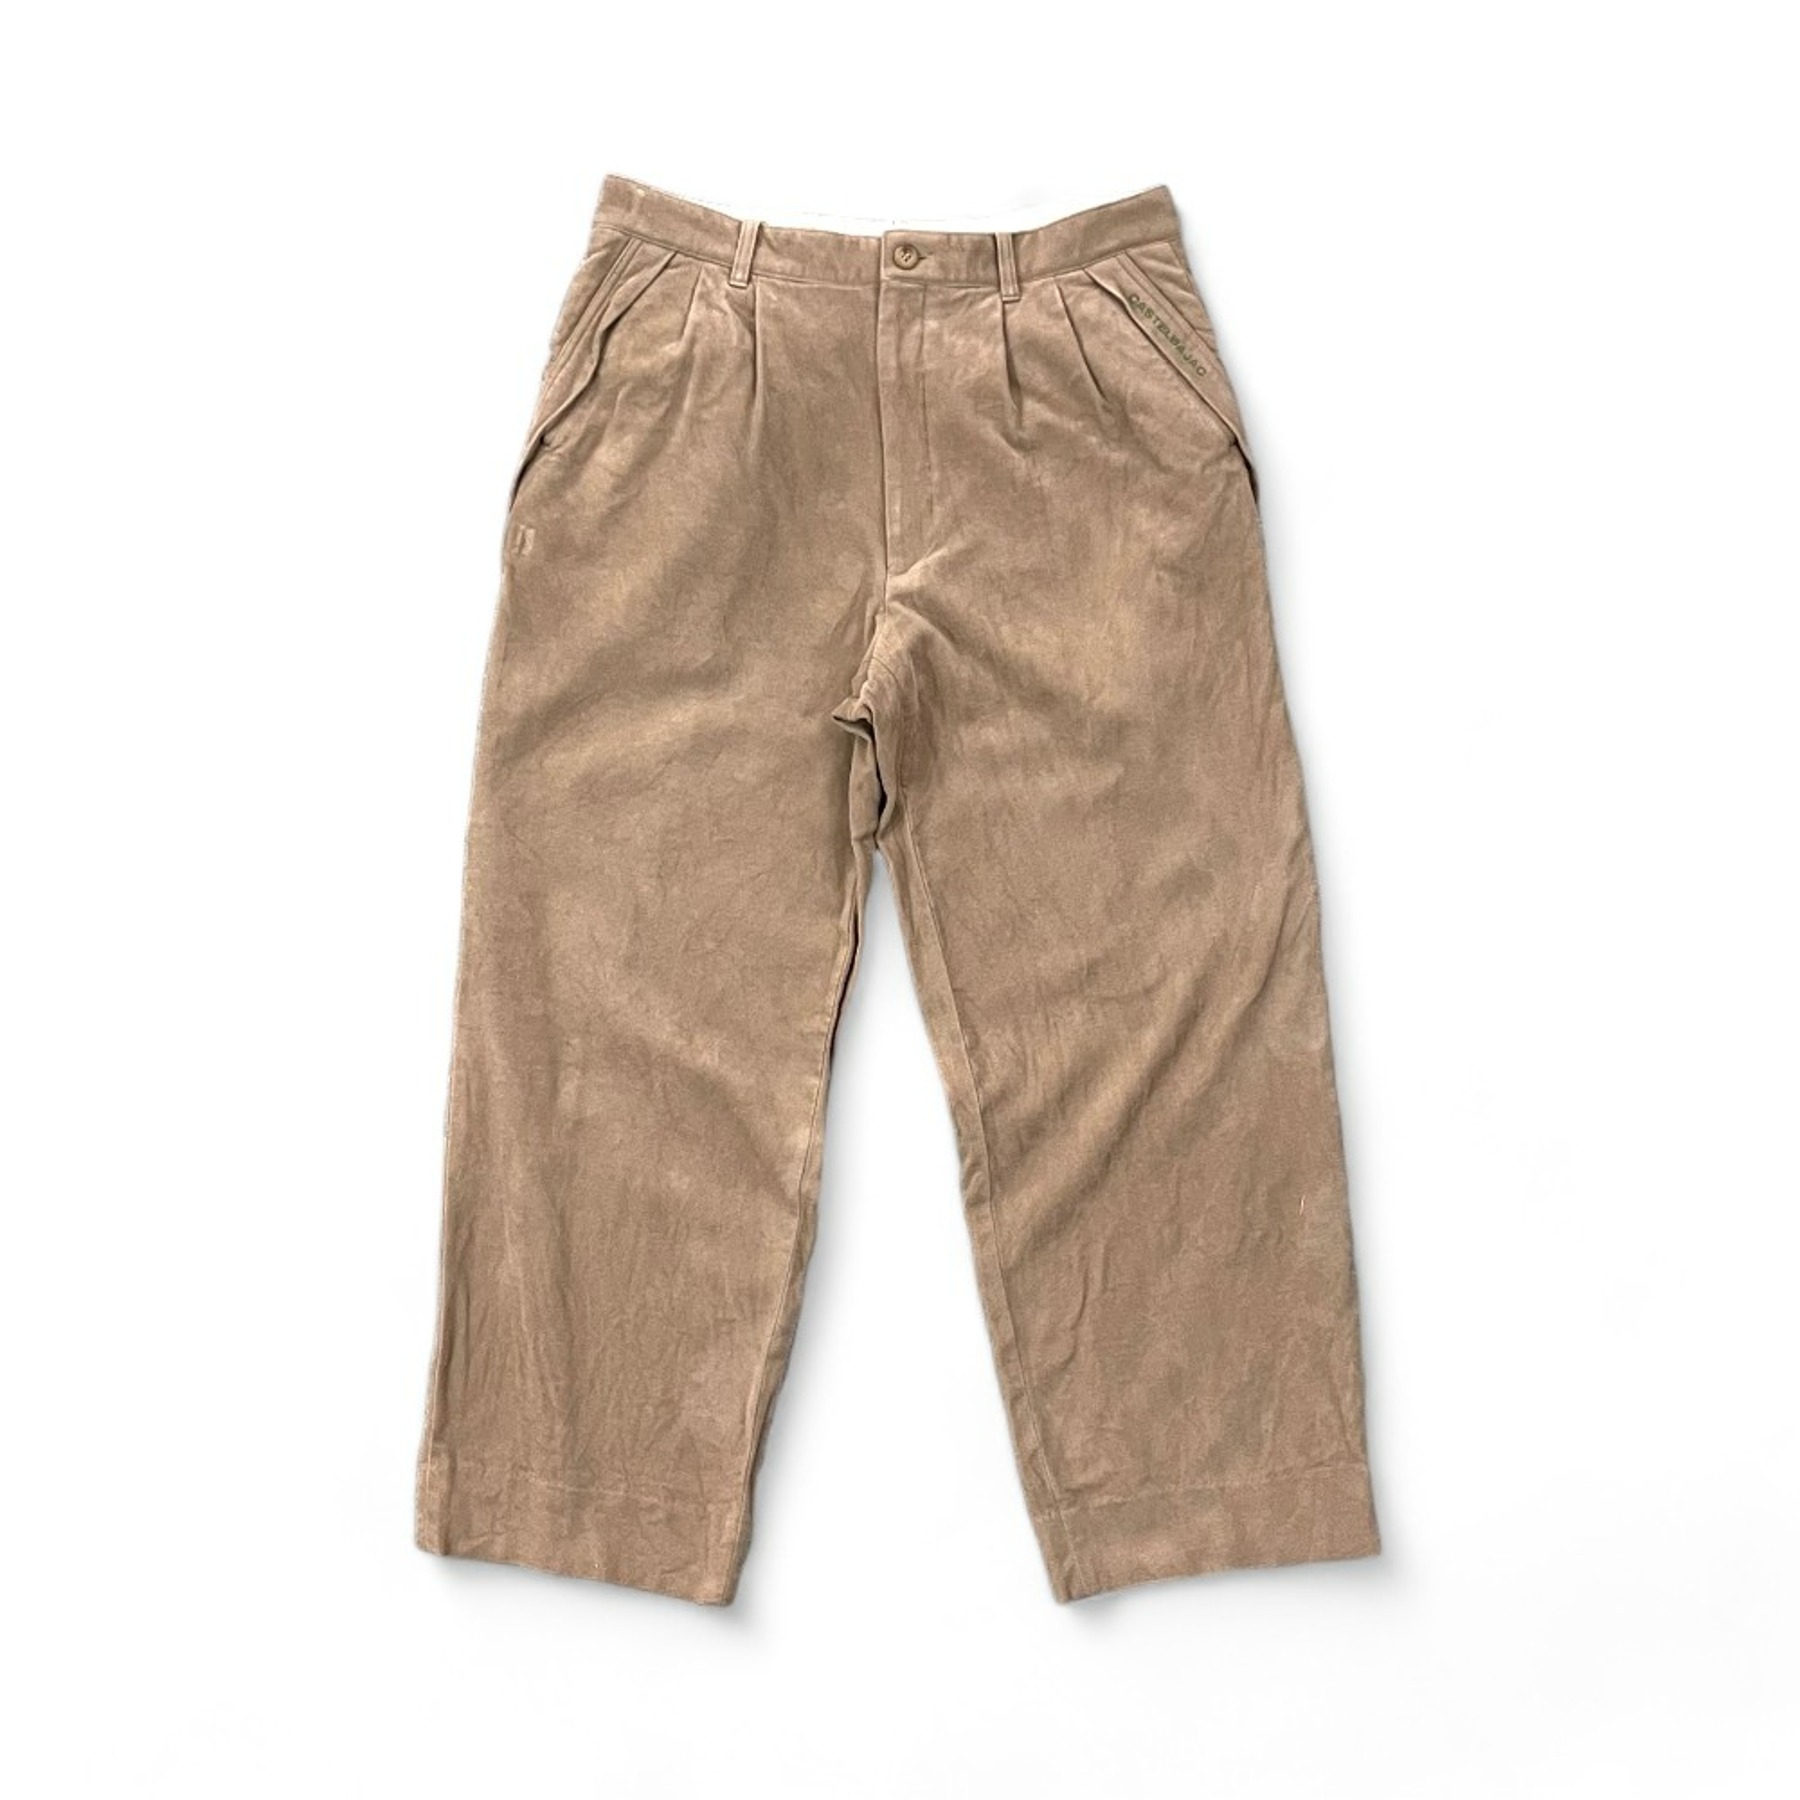 CASTELBAJAC SPORT Pants (Made in JAPAN) - 34inch